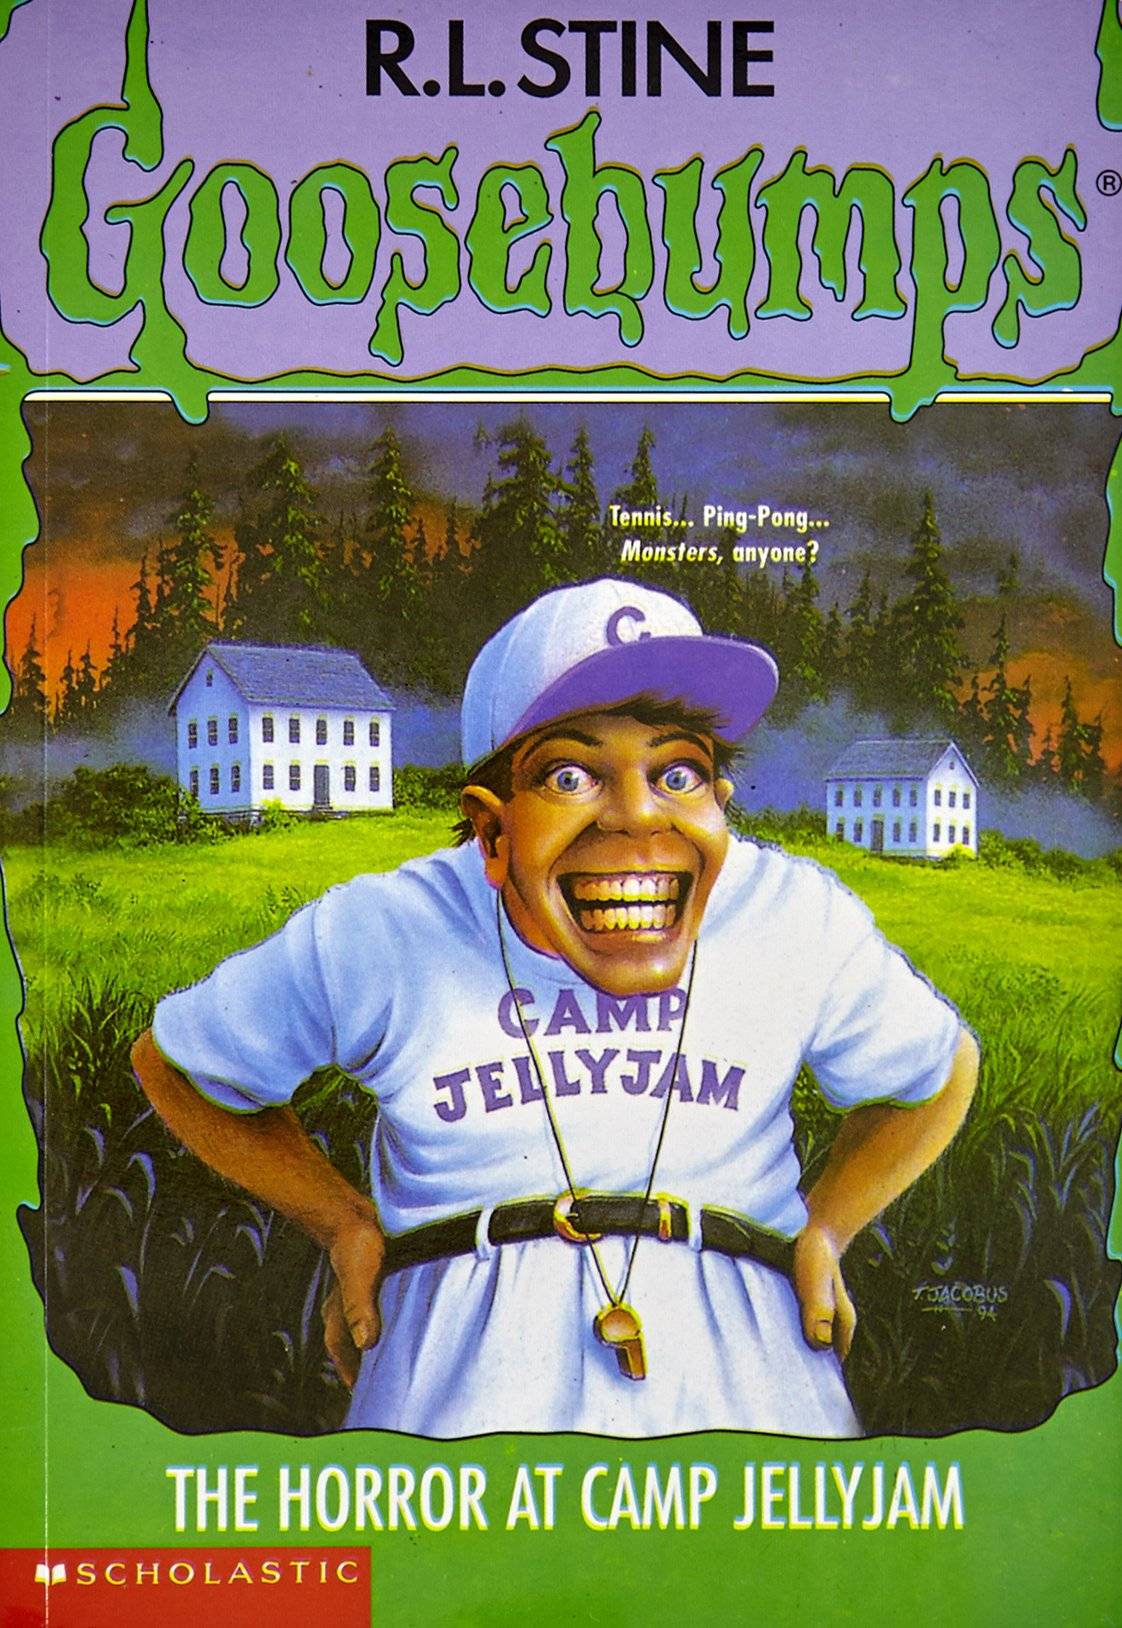 IMG : Goosebumps- the horror at camp jellyjam